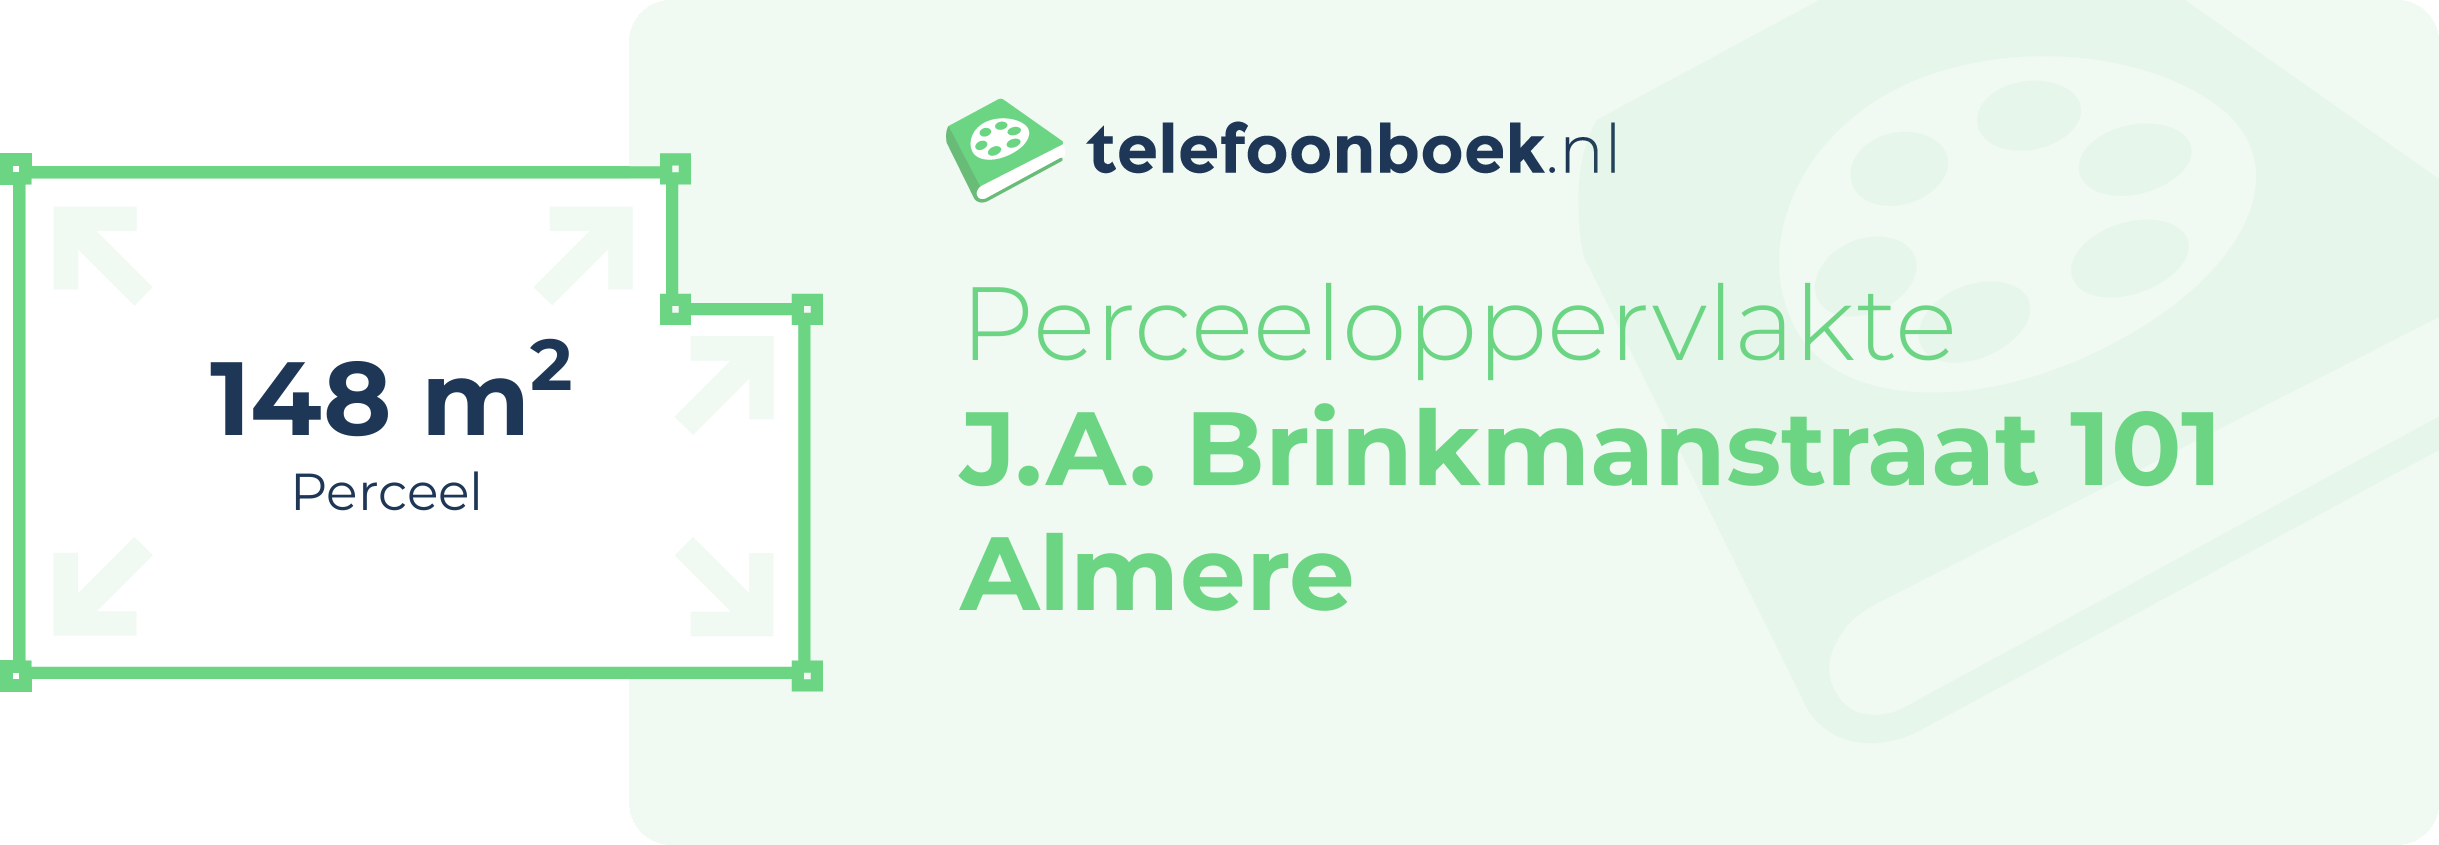 Perceeloppervlakte J.A. Brinkmanstraat 101 Almere